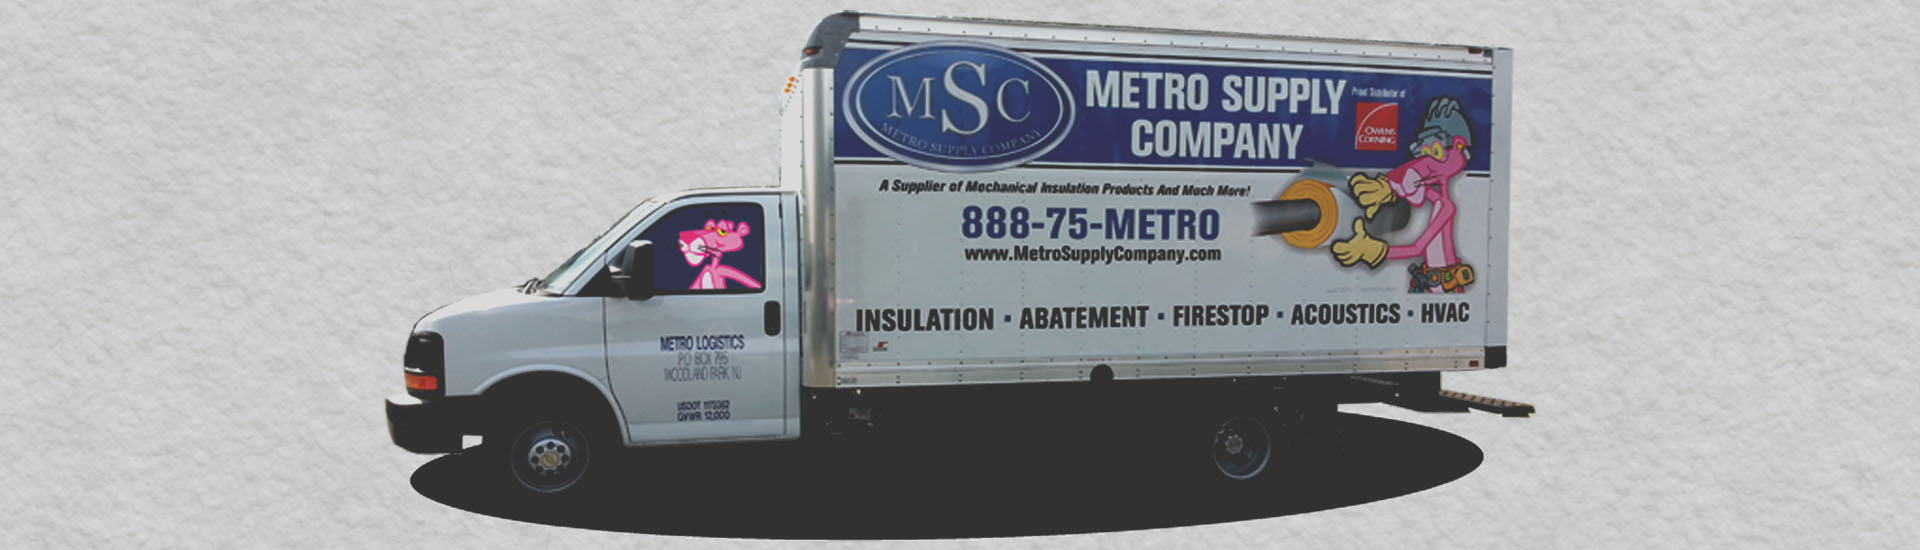 Metro Supply Company Van